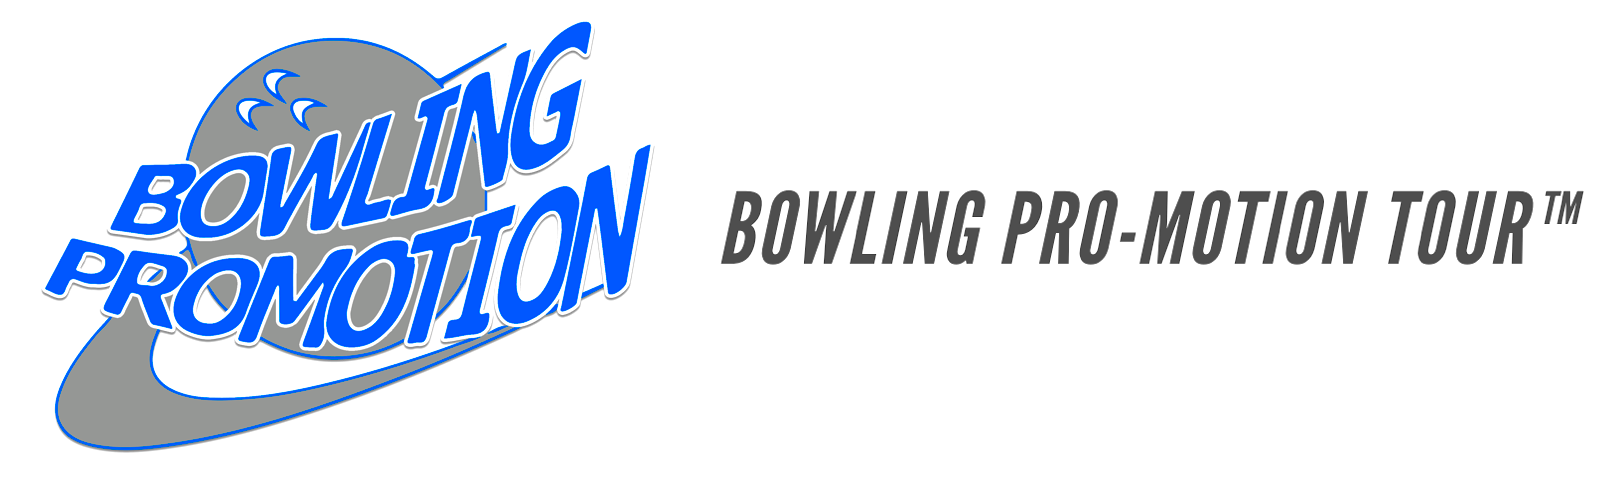 Bruno Bidone Pro Bowling™ - Official Website